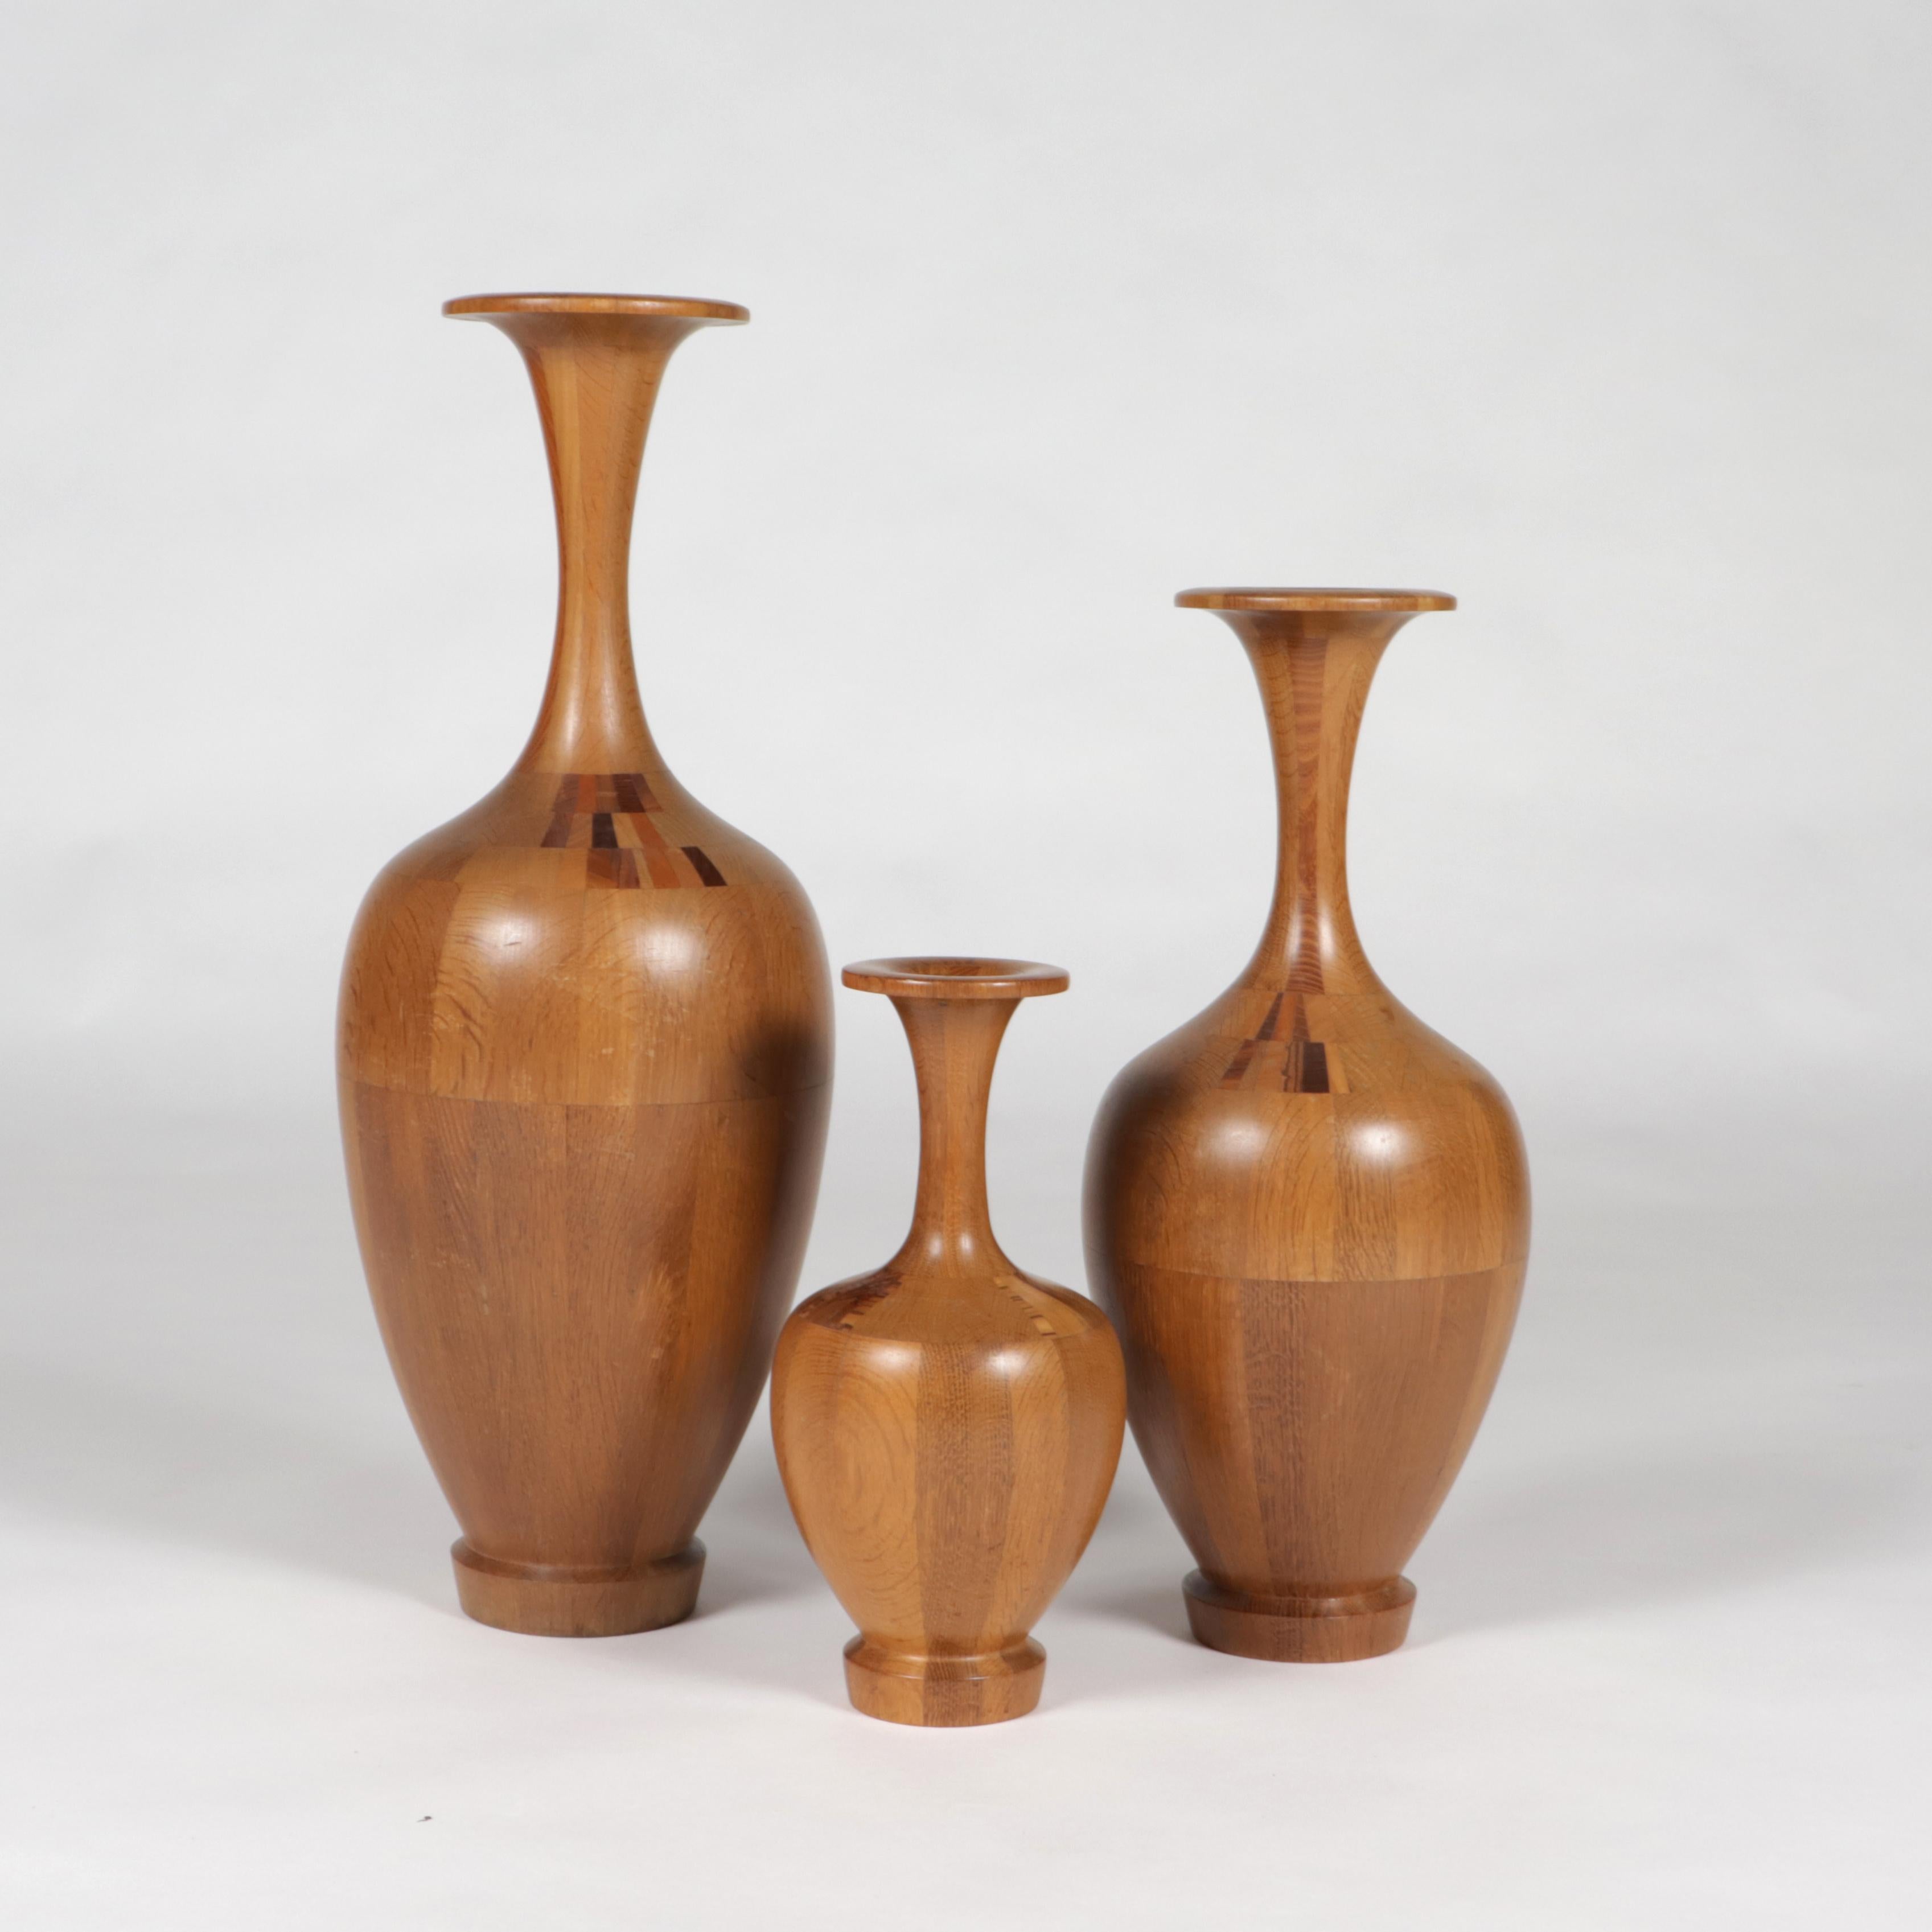 Set of 3 wooden vases by Maurice Bonami, c. 1960.